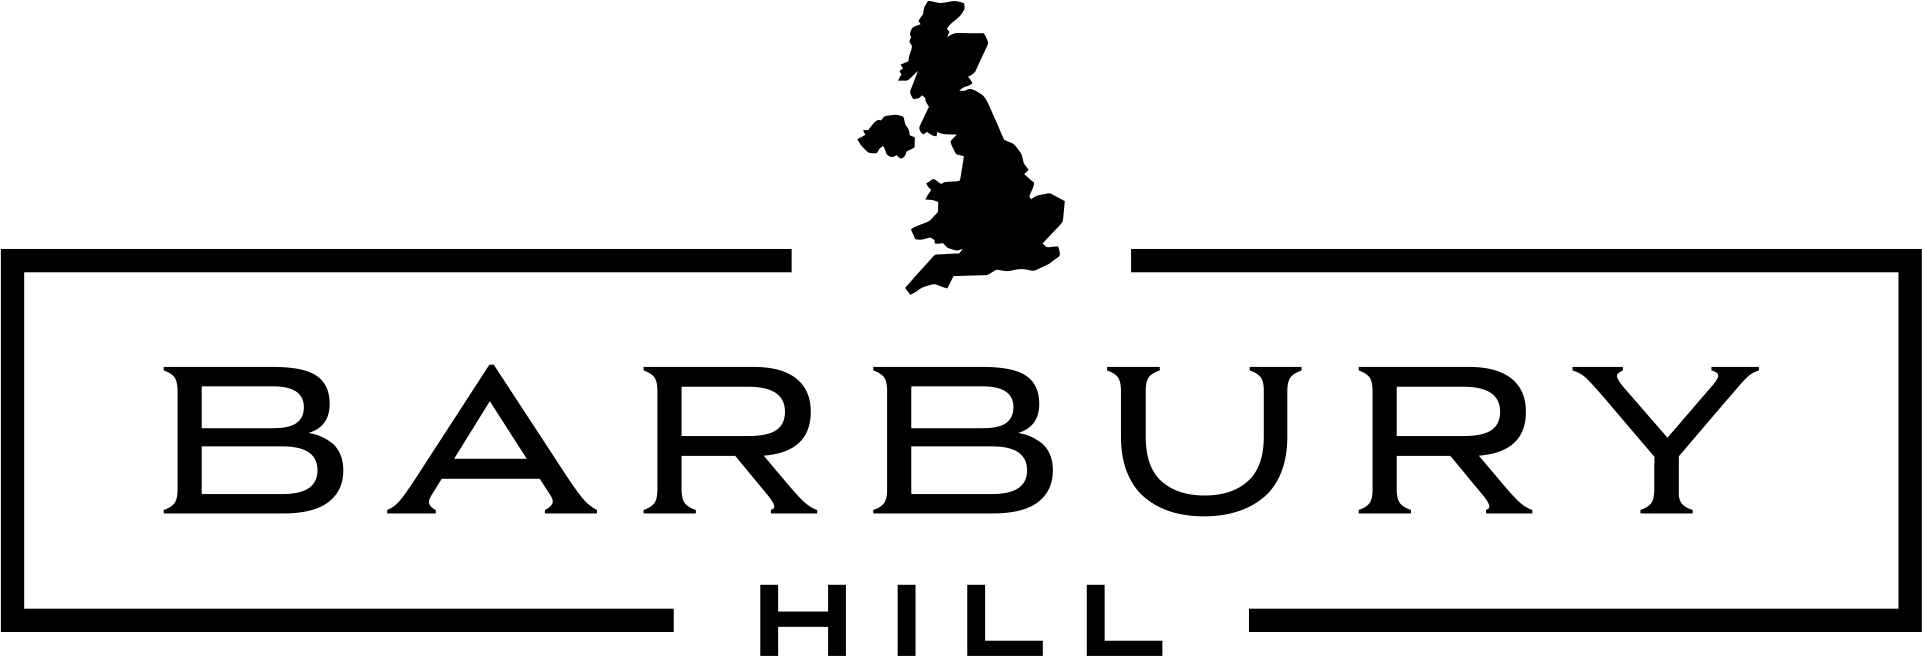 Barbury Hill's logo